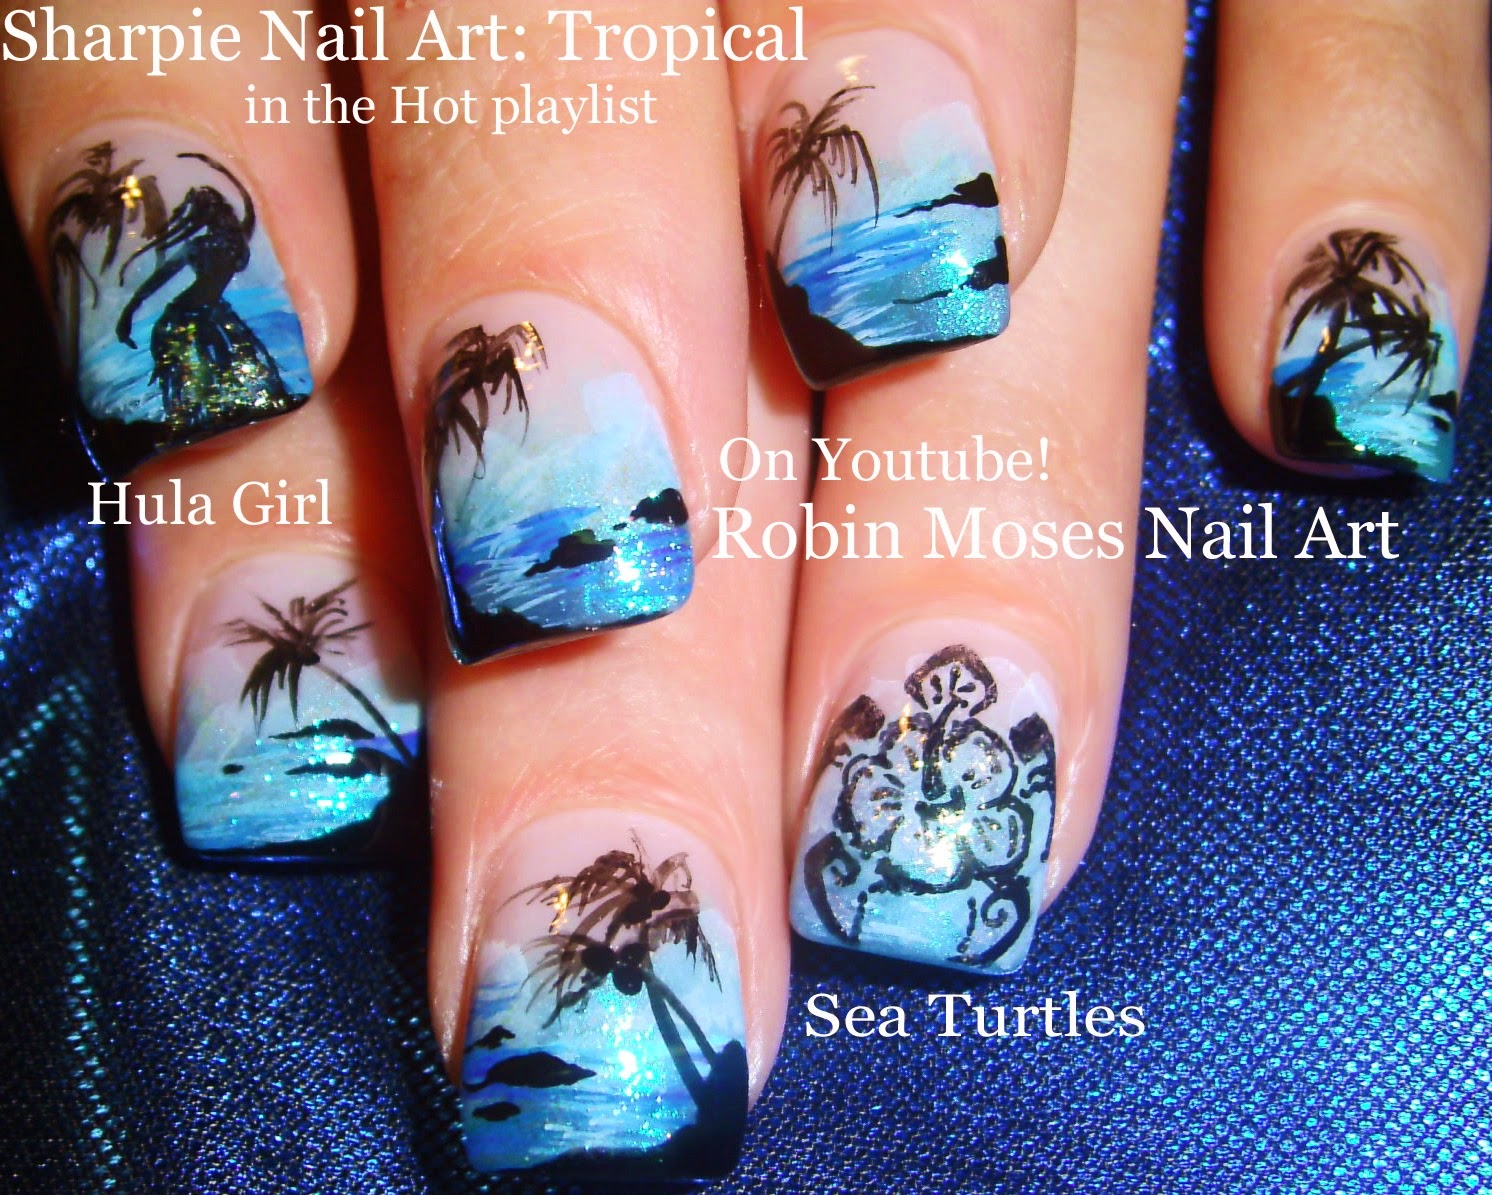 5. Colorful Hawaiian Nail Art Tutorial - wide 6